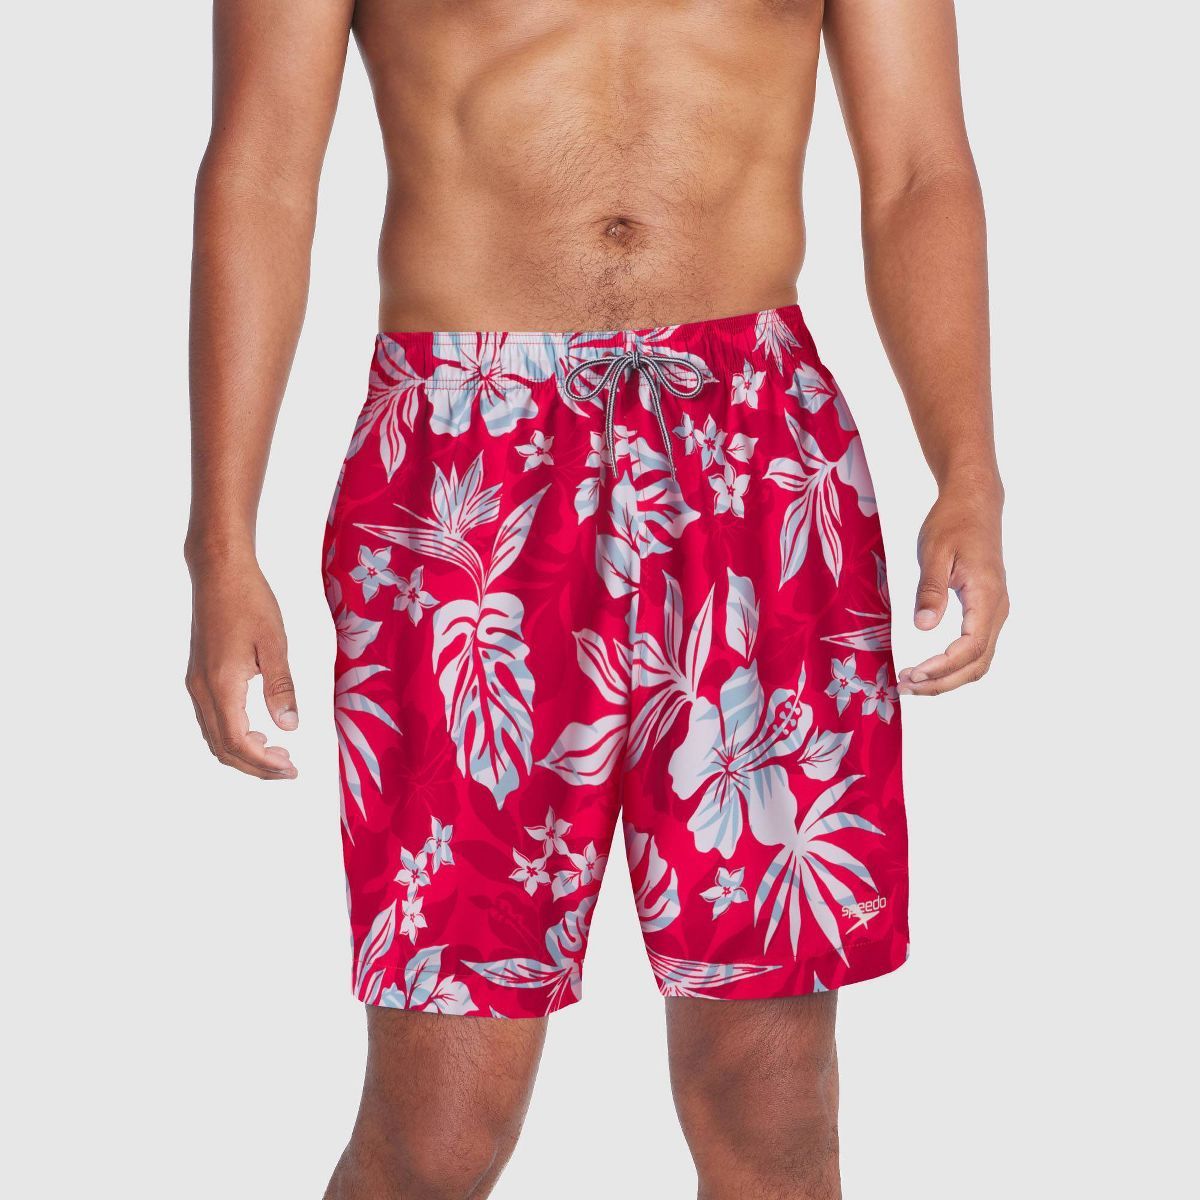 Speedo Men's 7" Floral Print Swim Shorts - Coral Red | Target